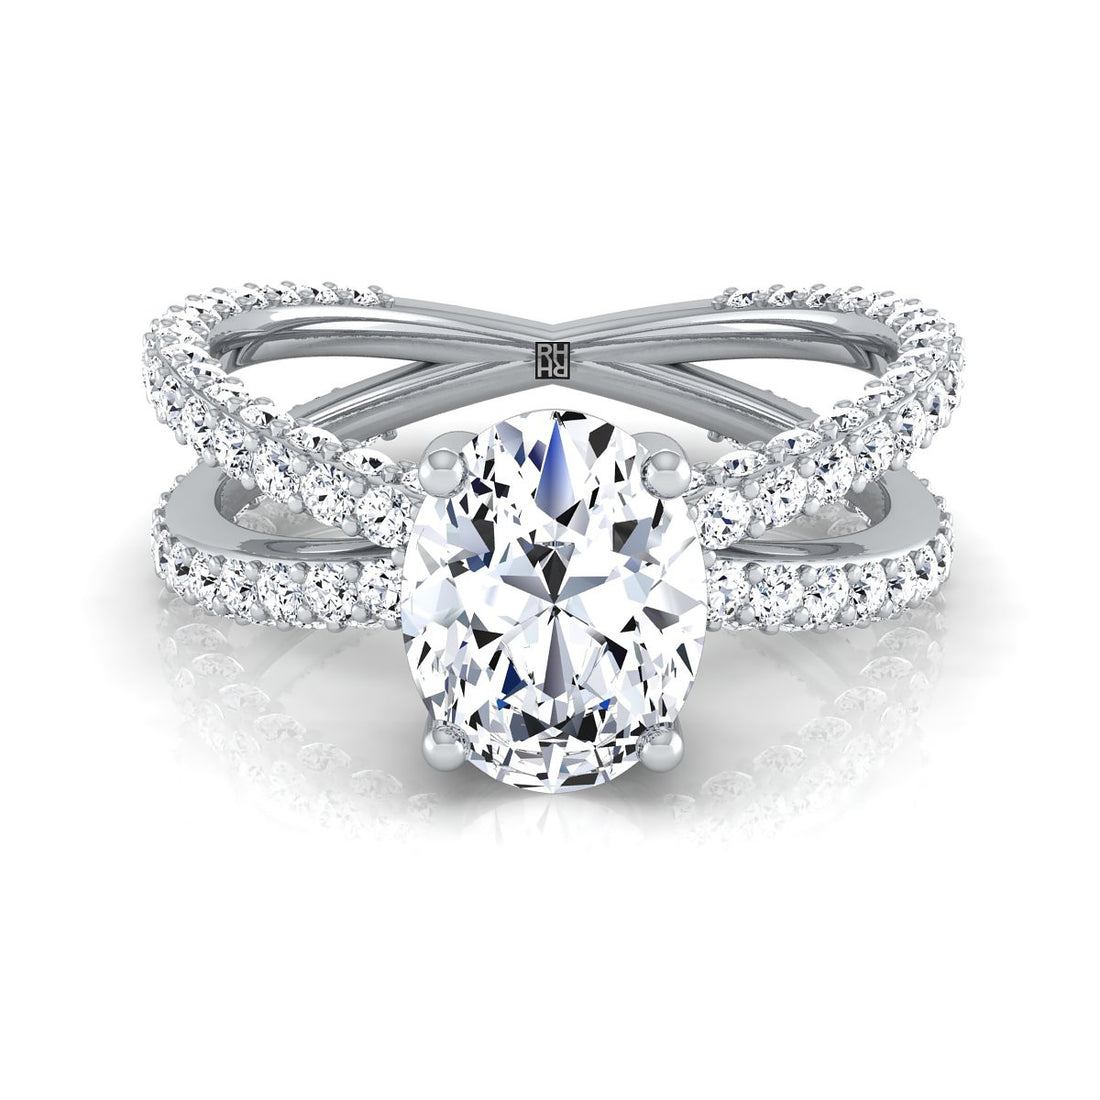 Where to Buy Diamond Engagement Rings?